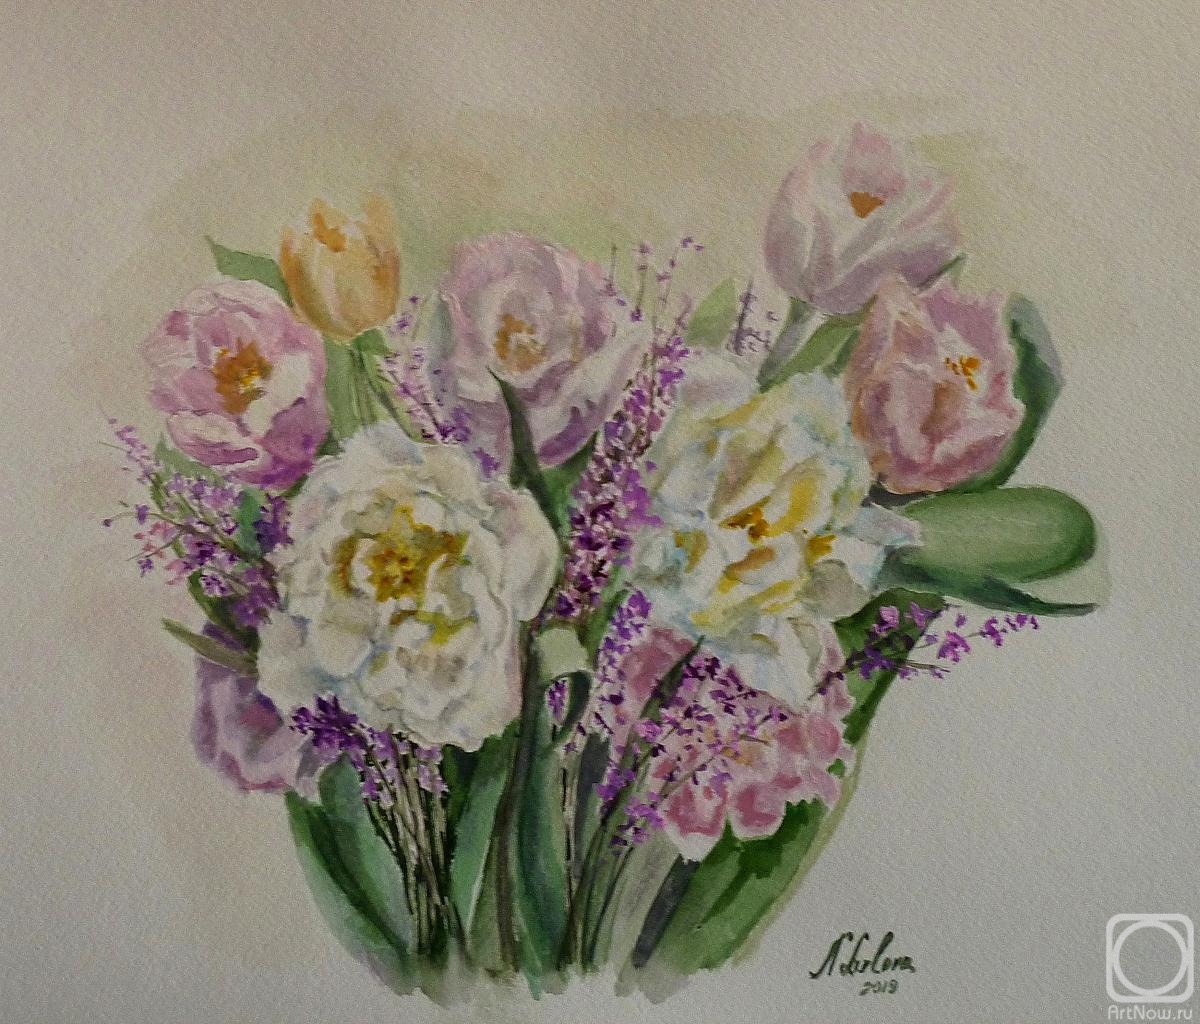 Lizlova Natalija. Bouquet with lavender